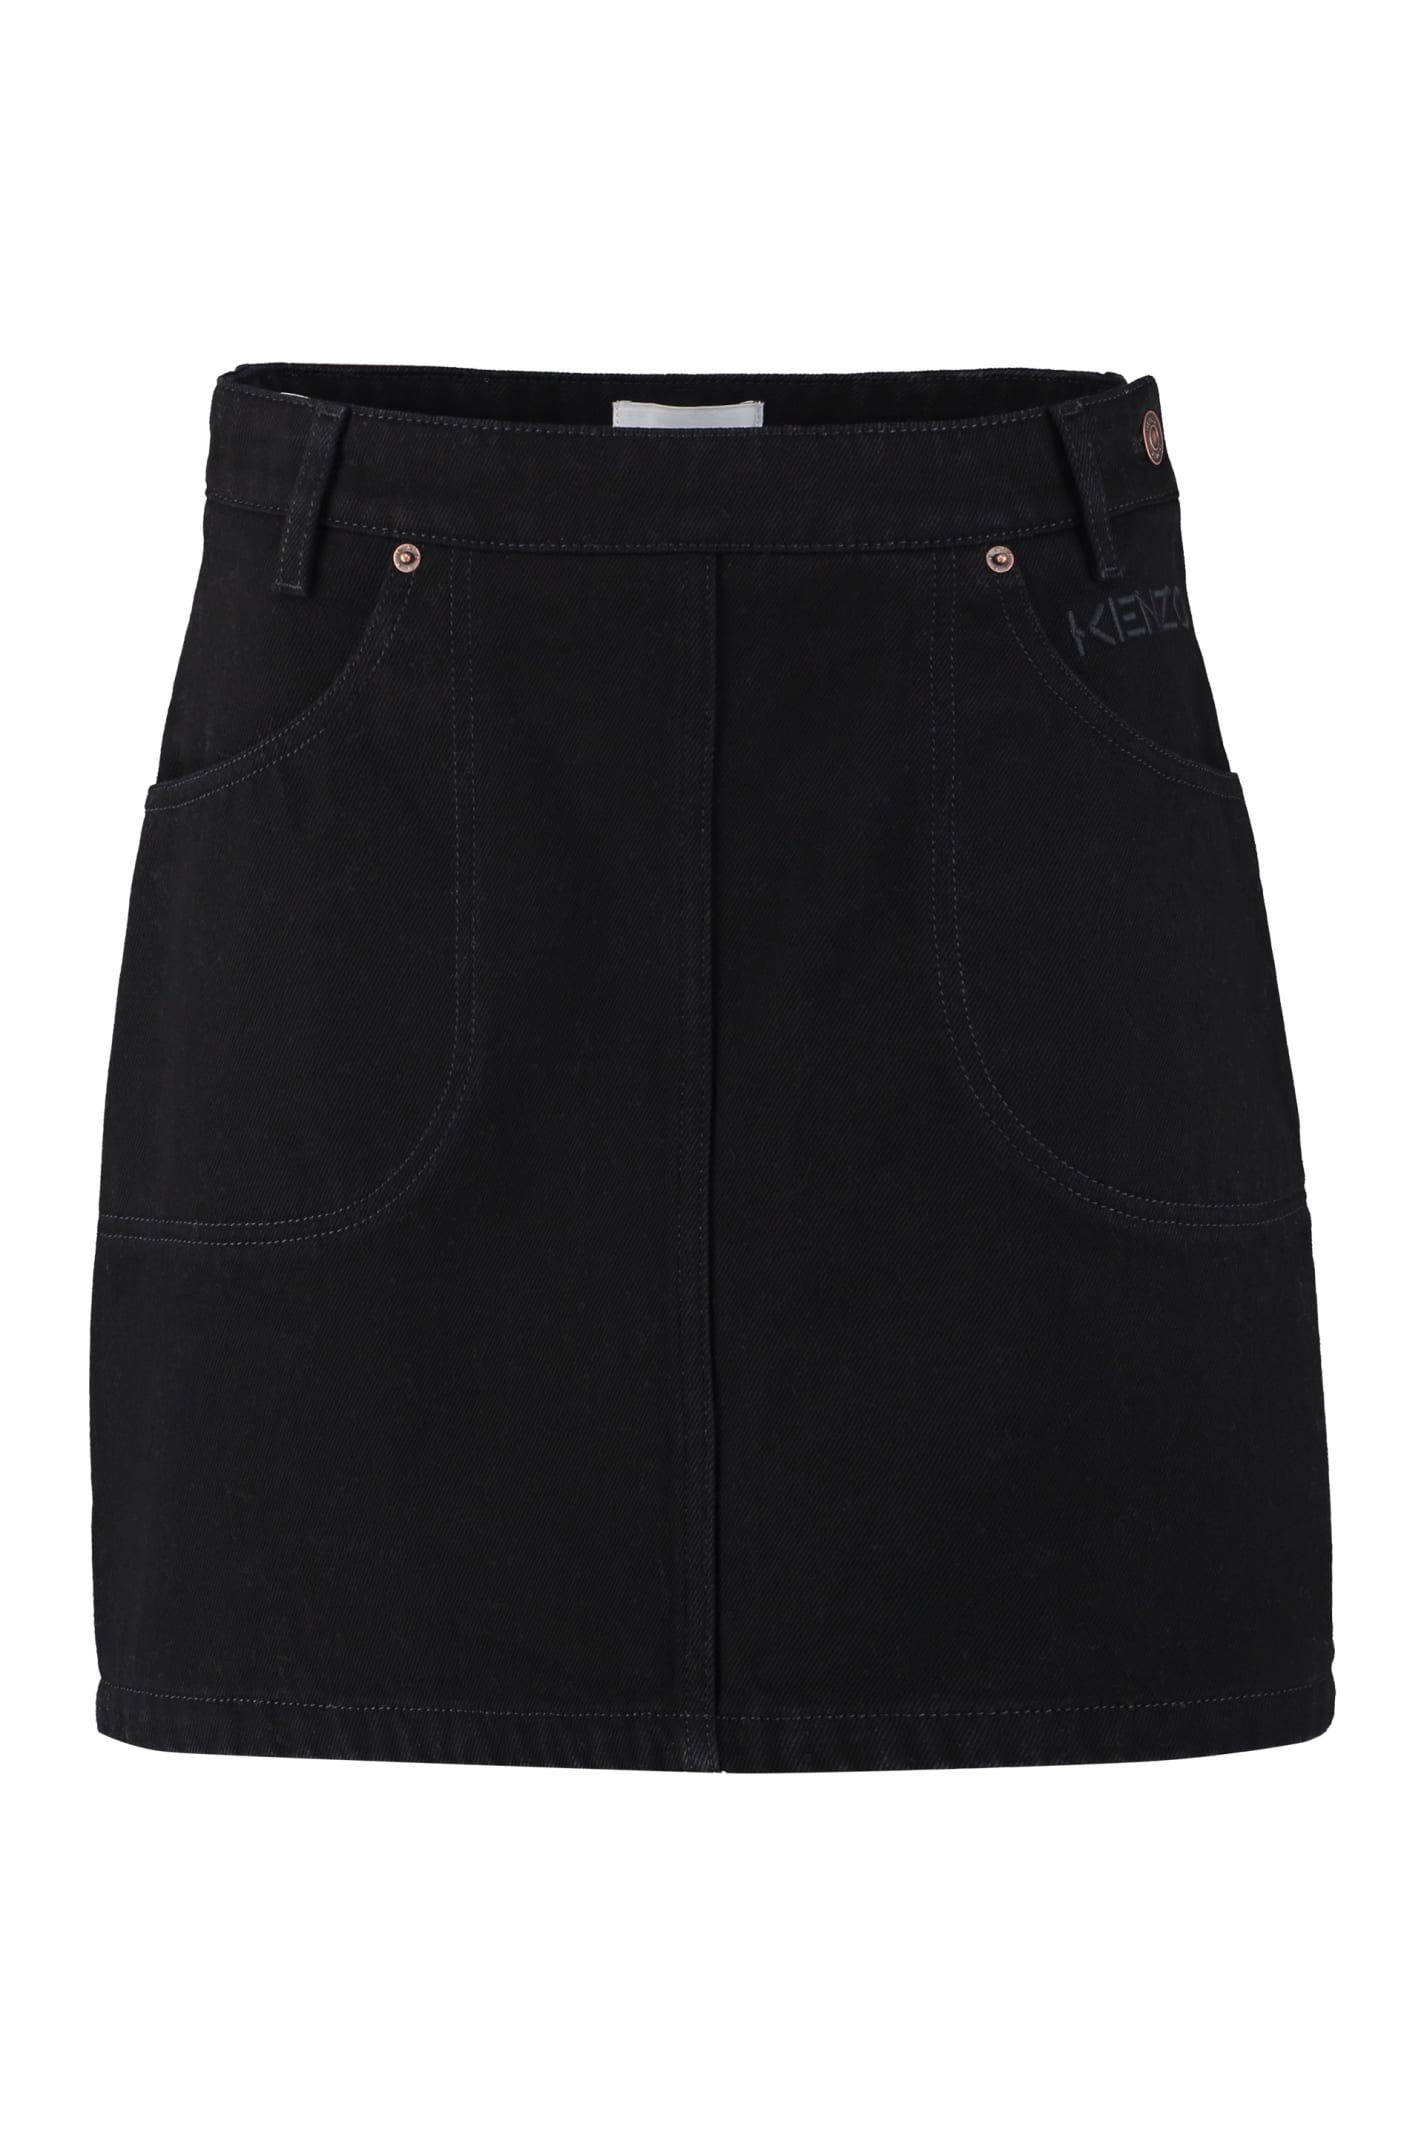 Kenzo Denim Mini Skirt